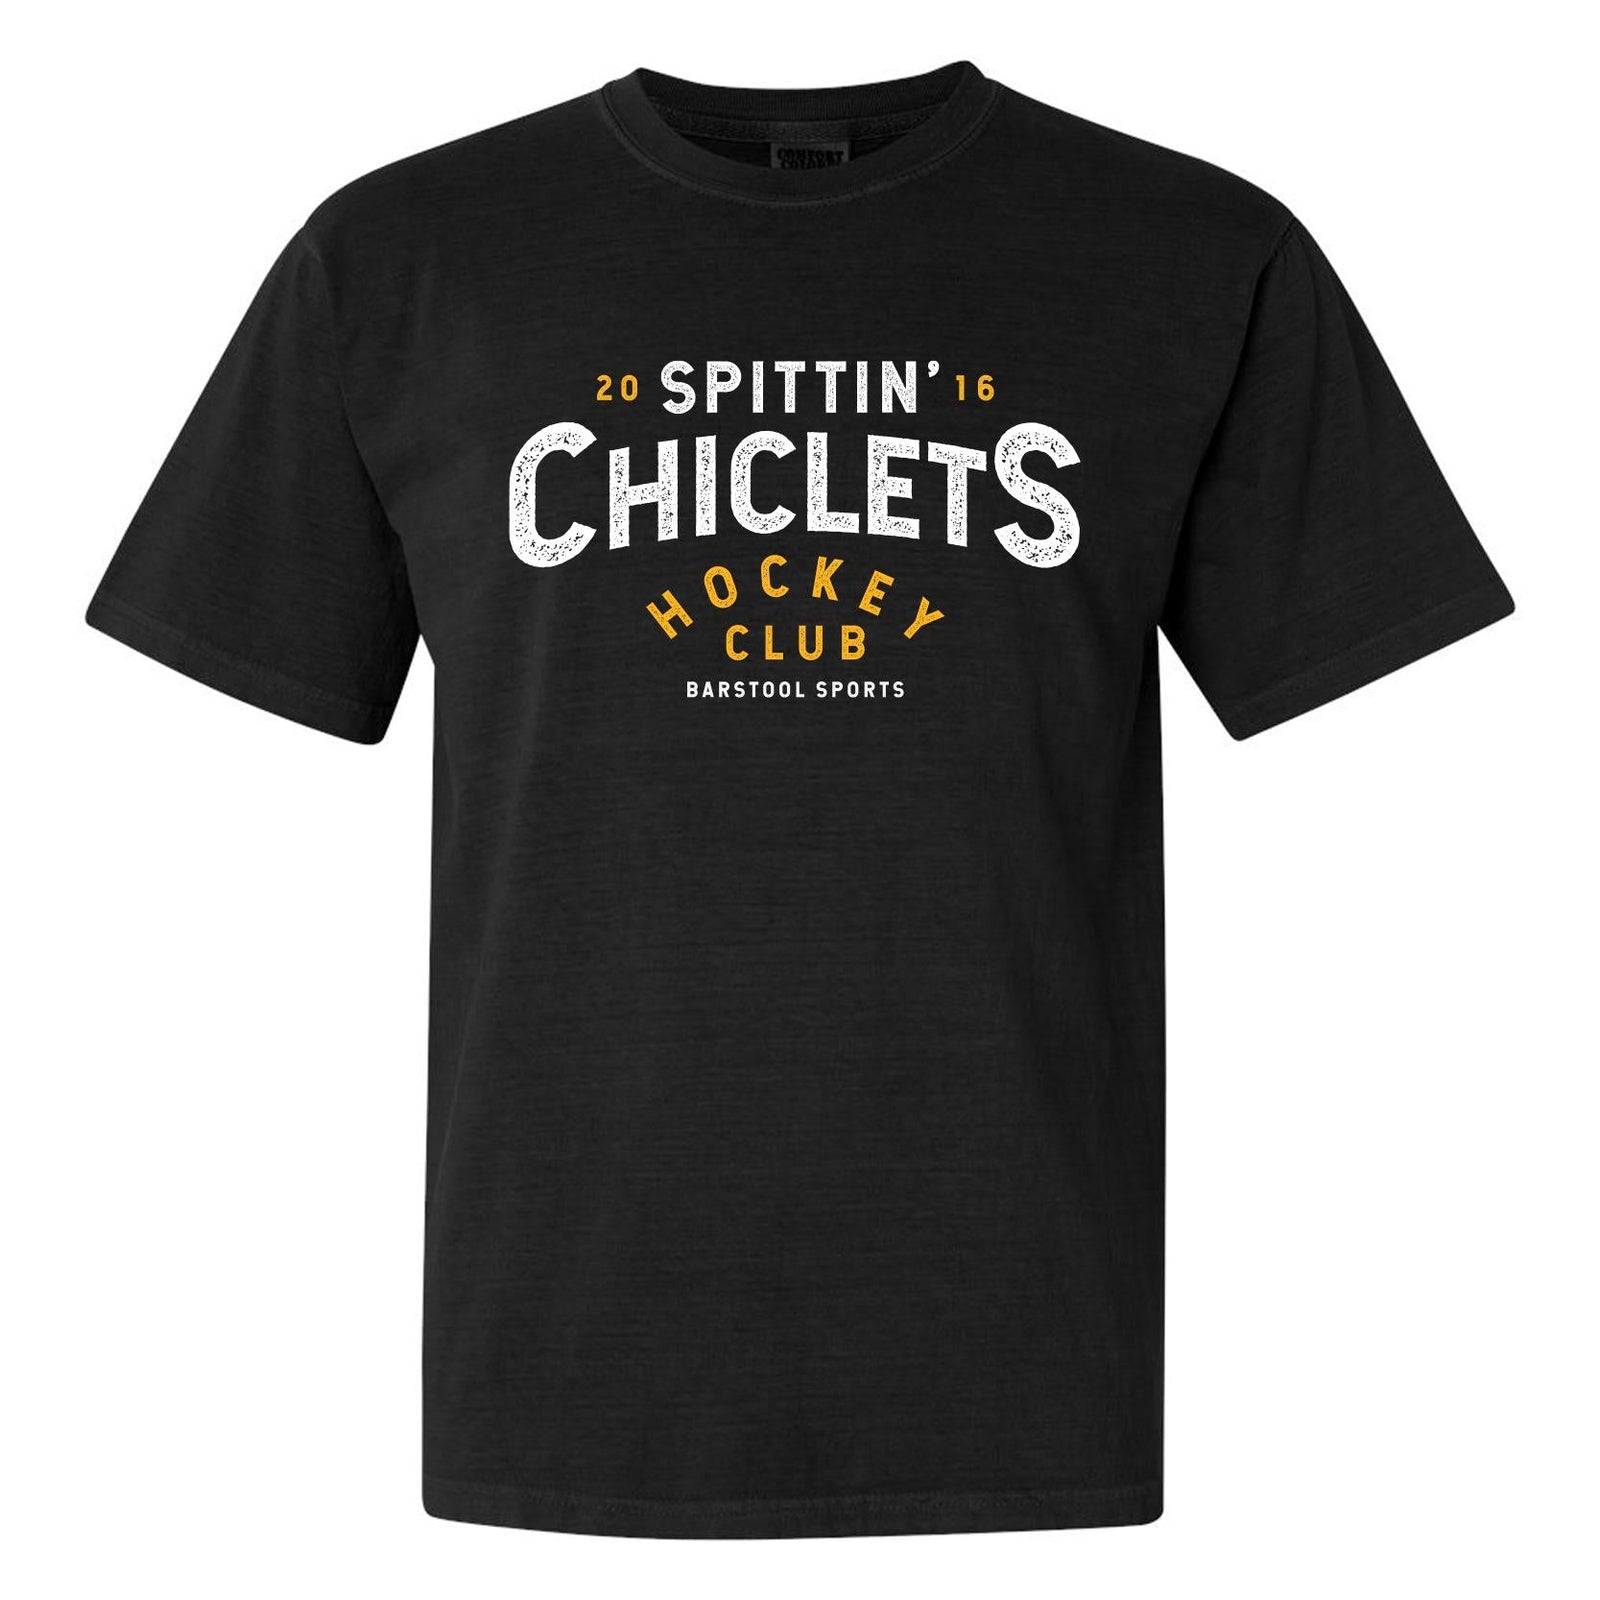 Spittin' Chiclets Hockey Club Tee